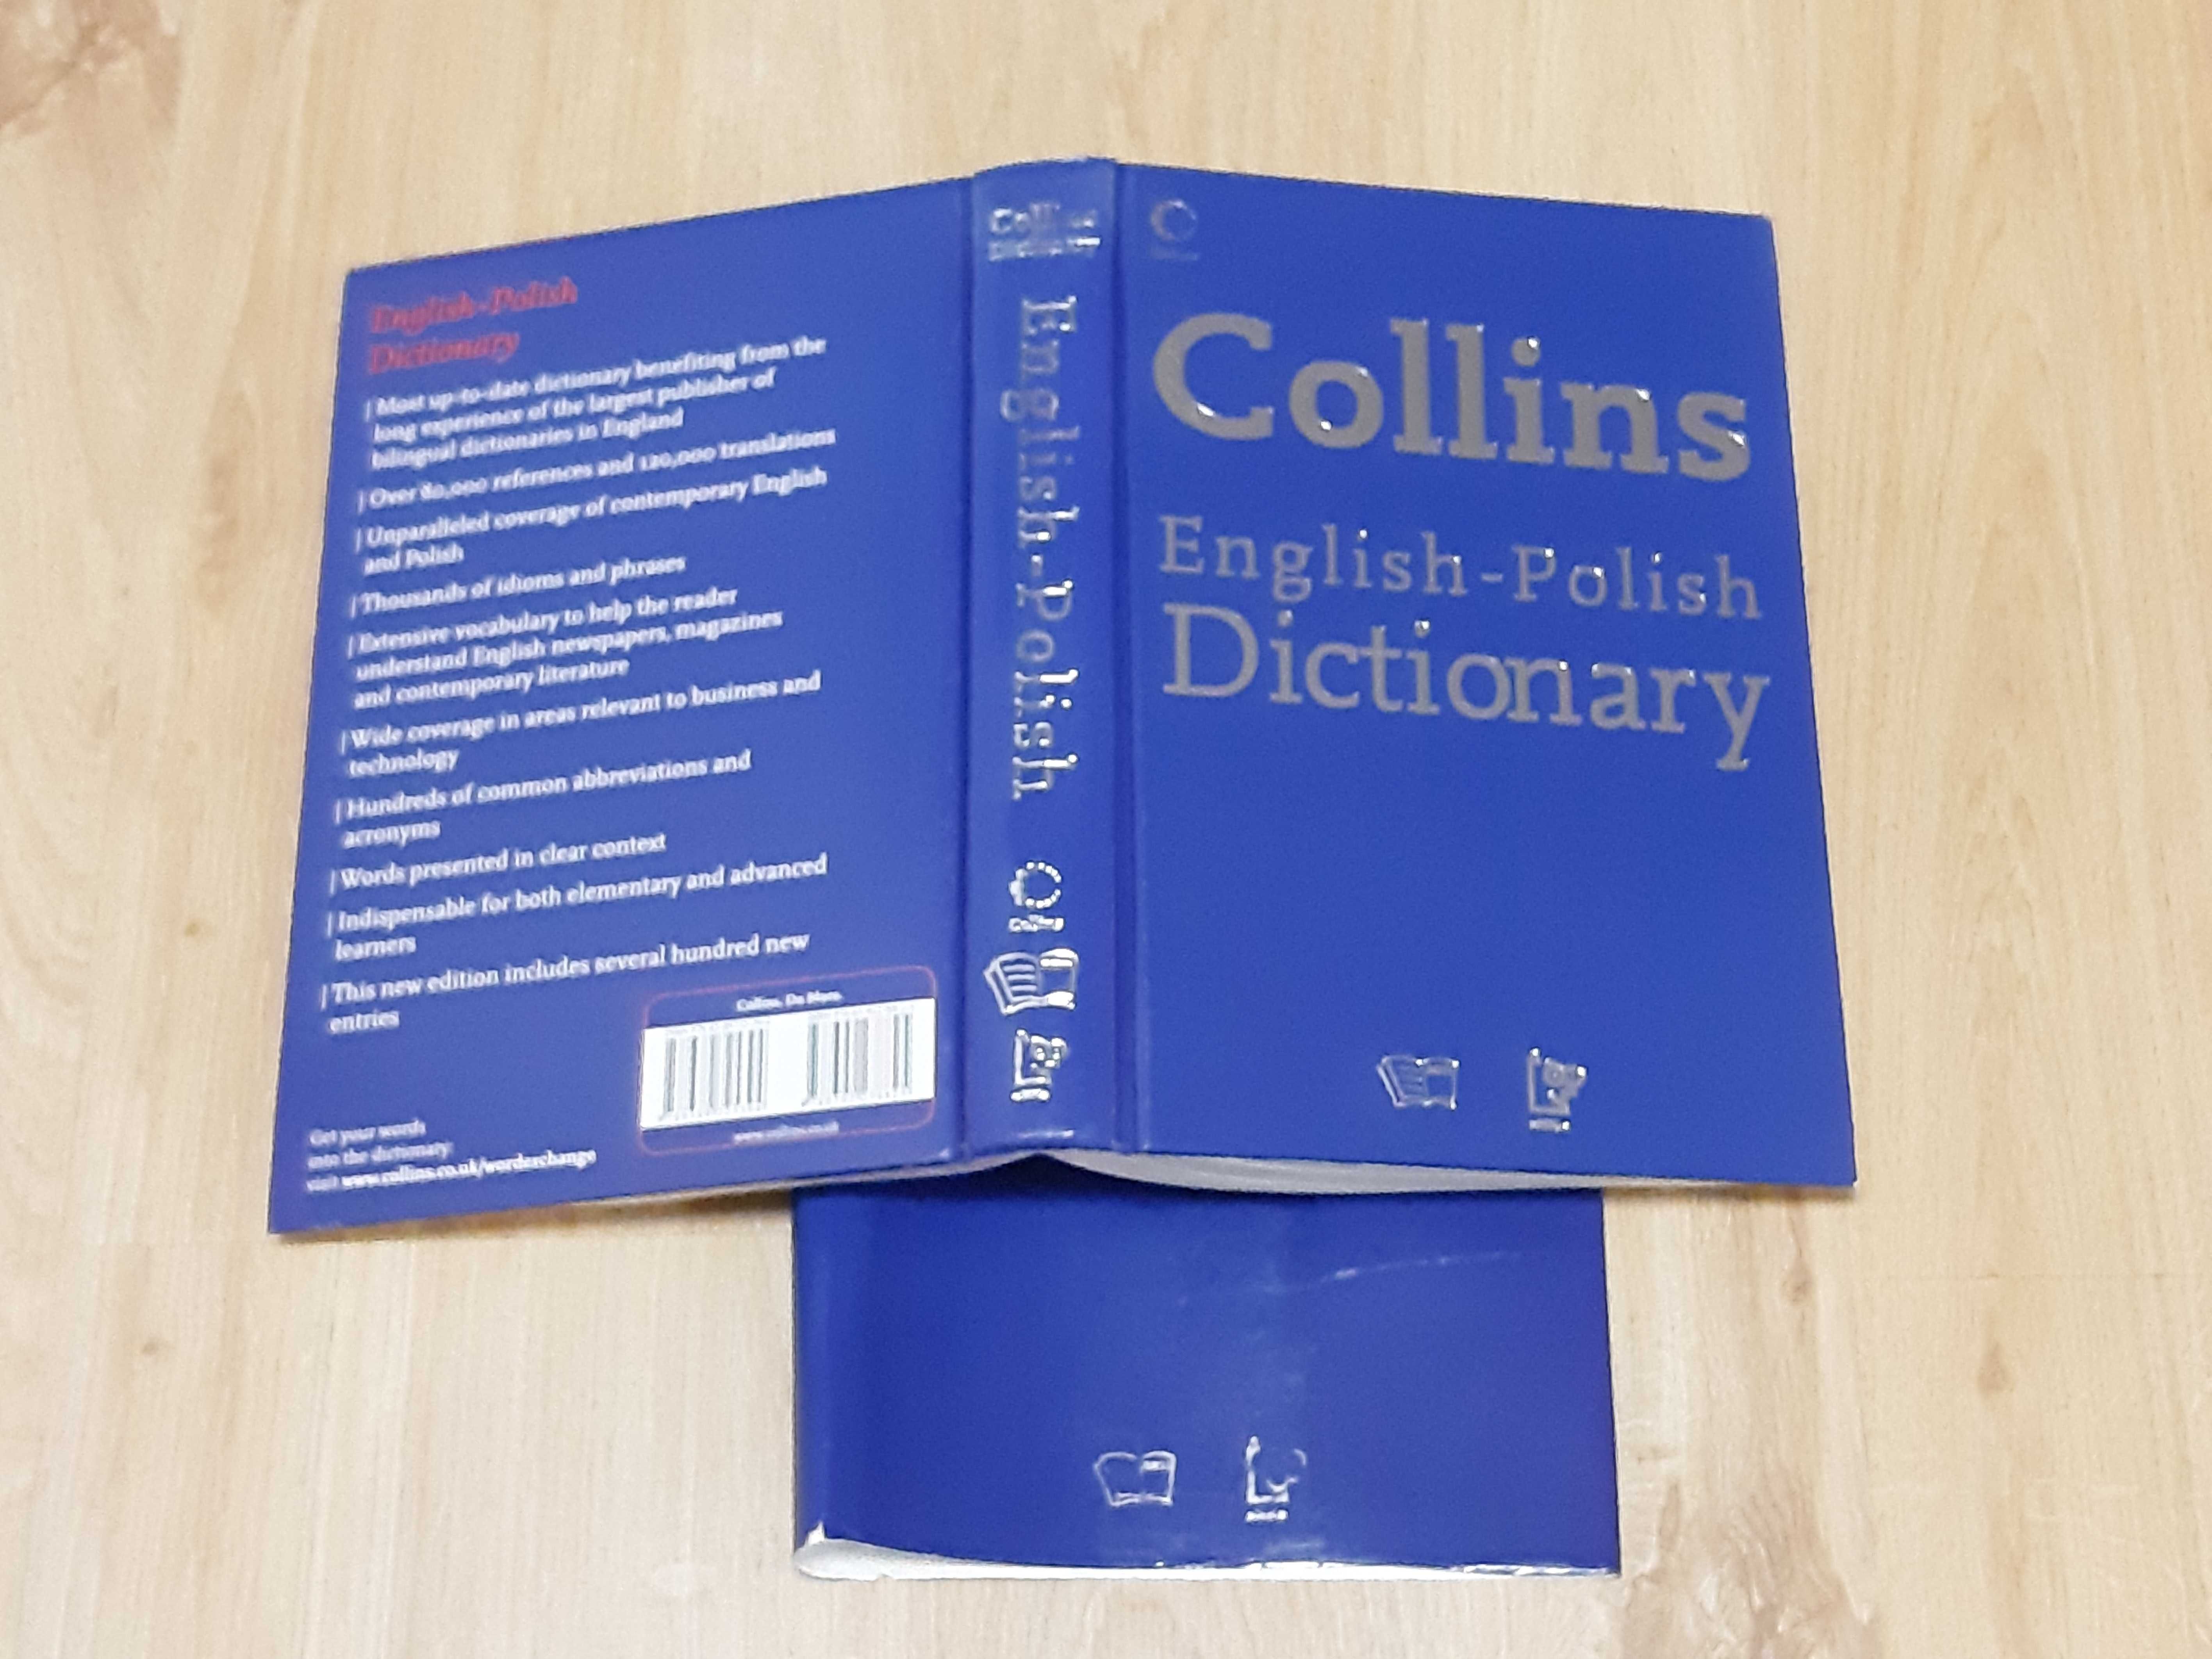 Słownik Collins English-Polish Dictionary